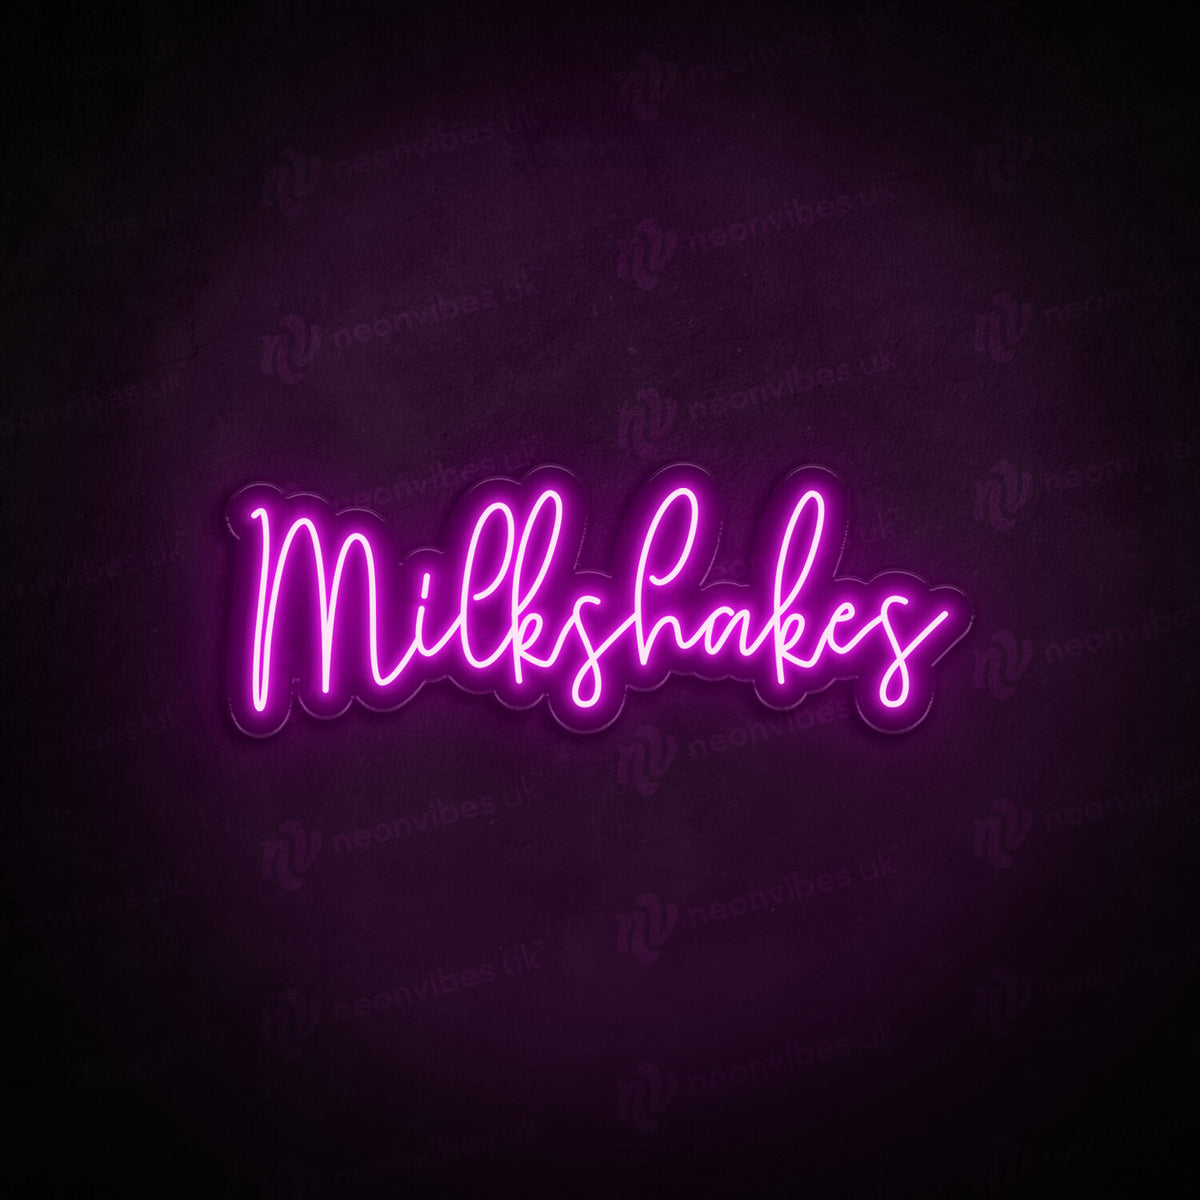 Milkshakes neon sign